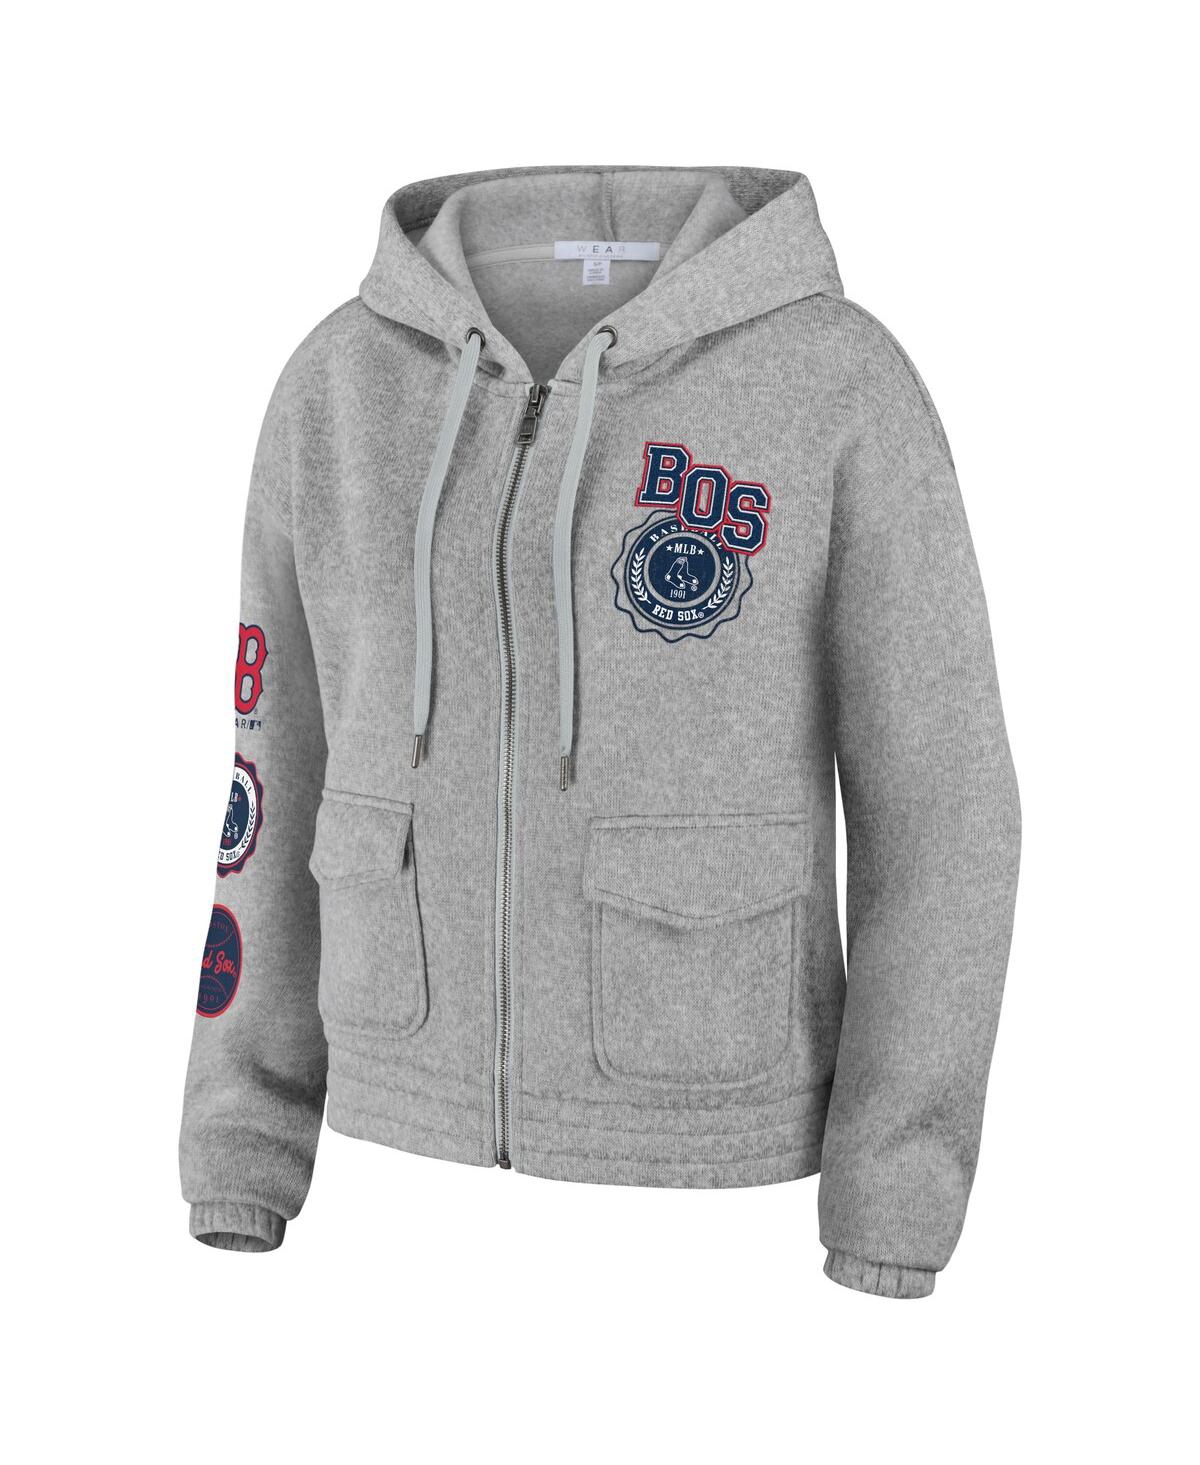 Shop Wear By Erin Andrews Women's  Gray Boston Red Sox Full-zip Hoodie